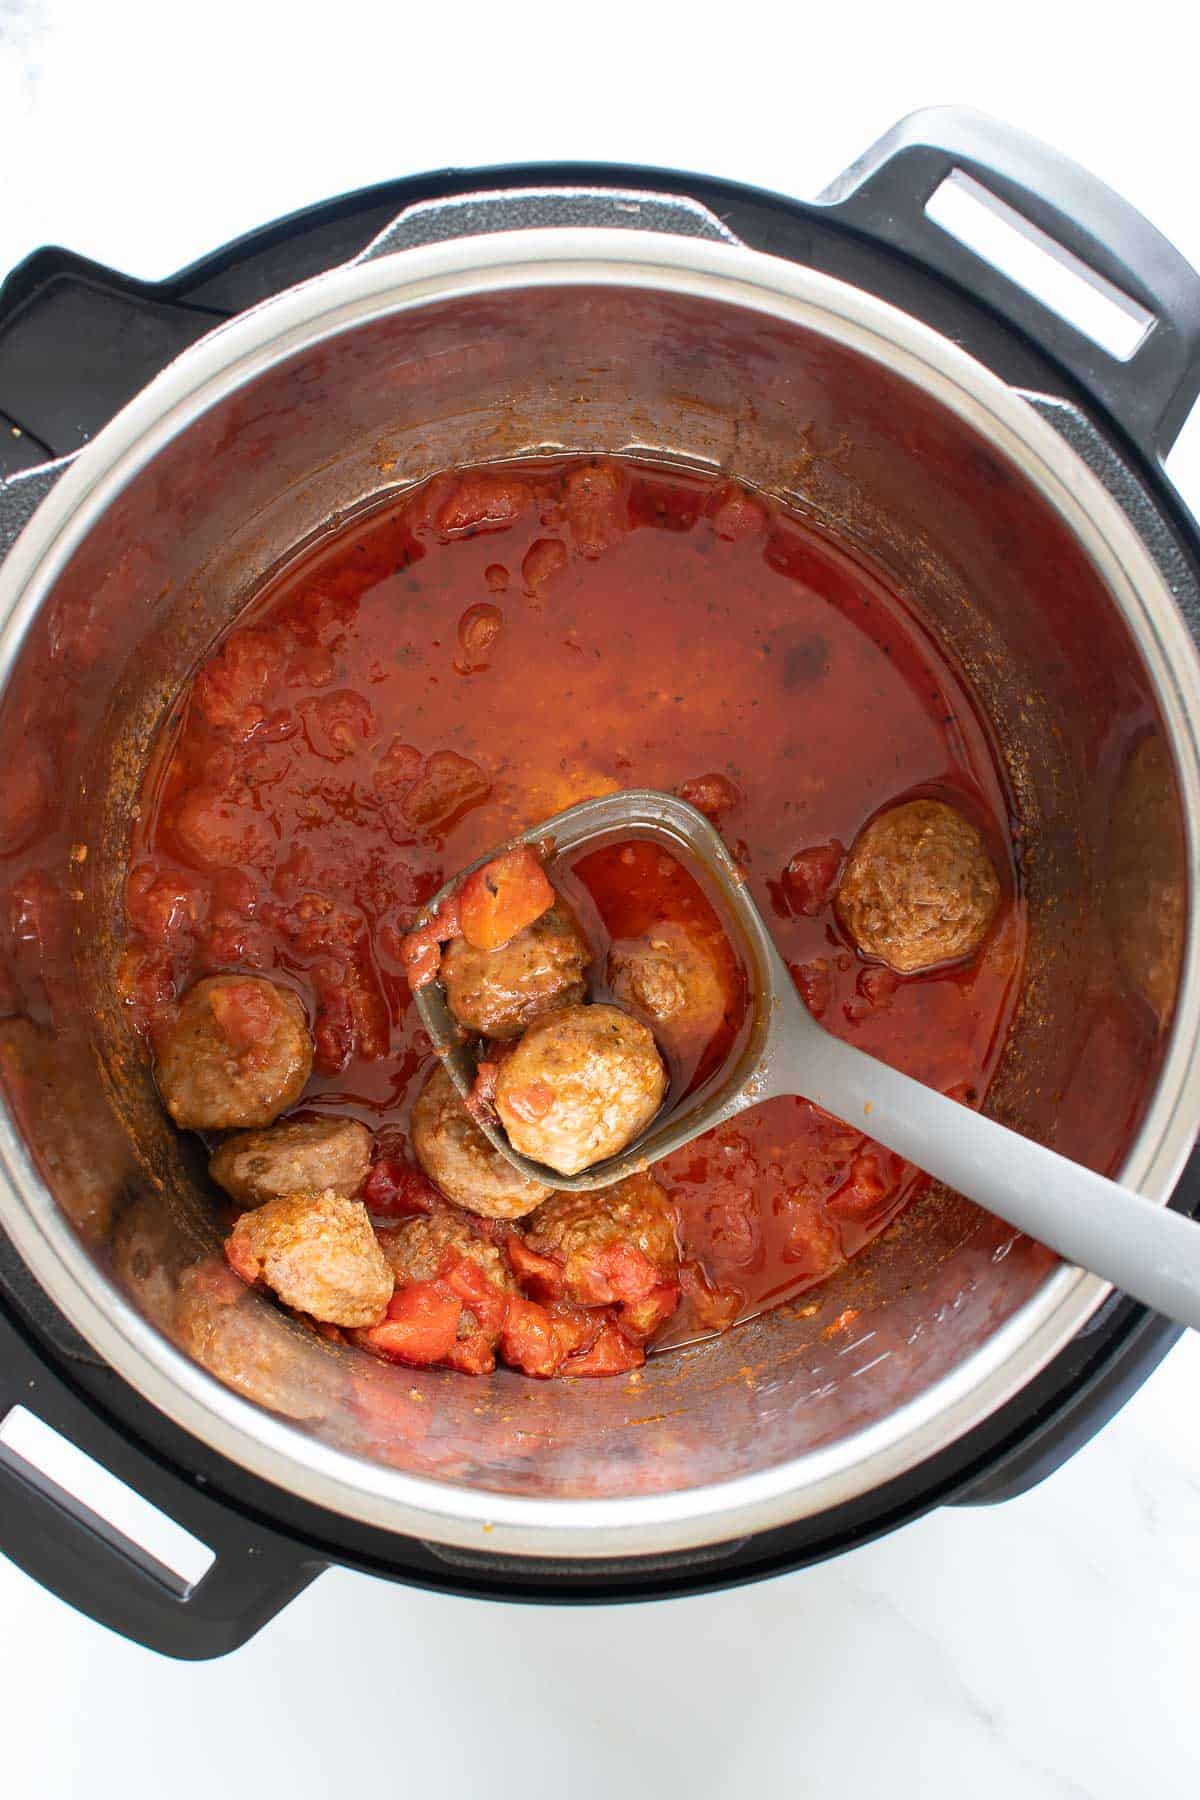 Meatballs in tomato sauce.